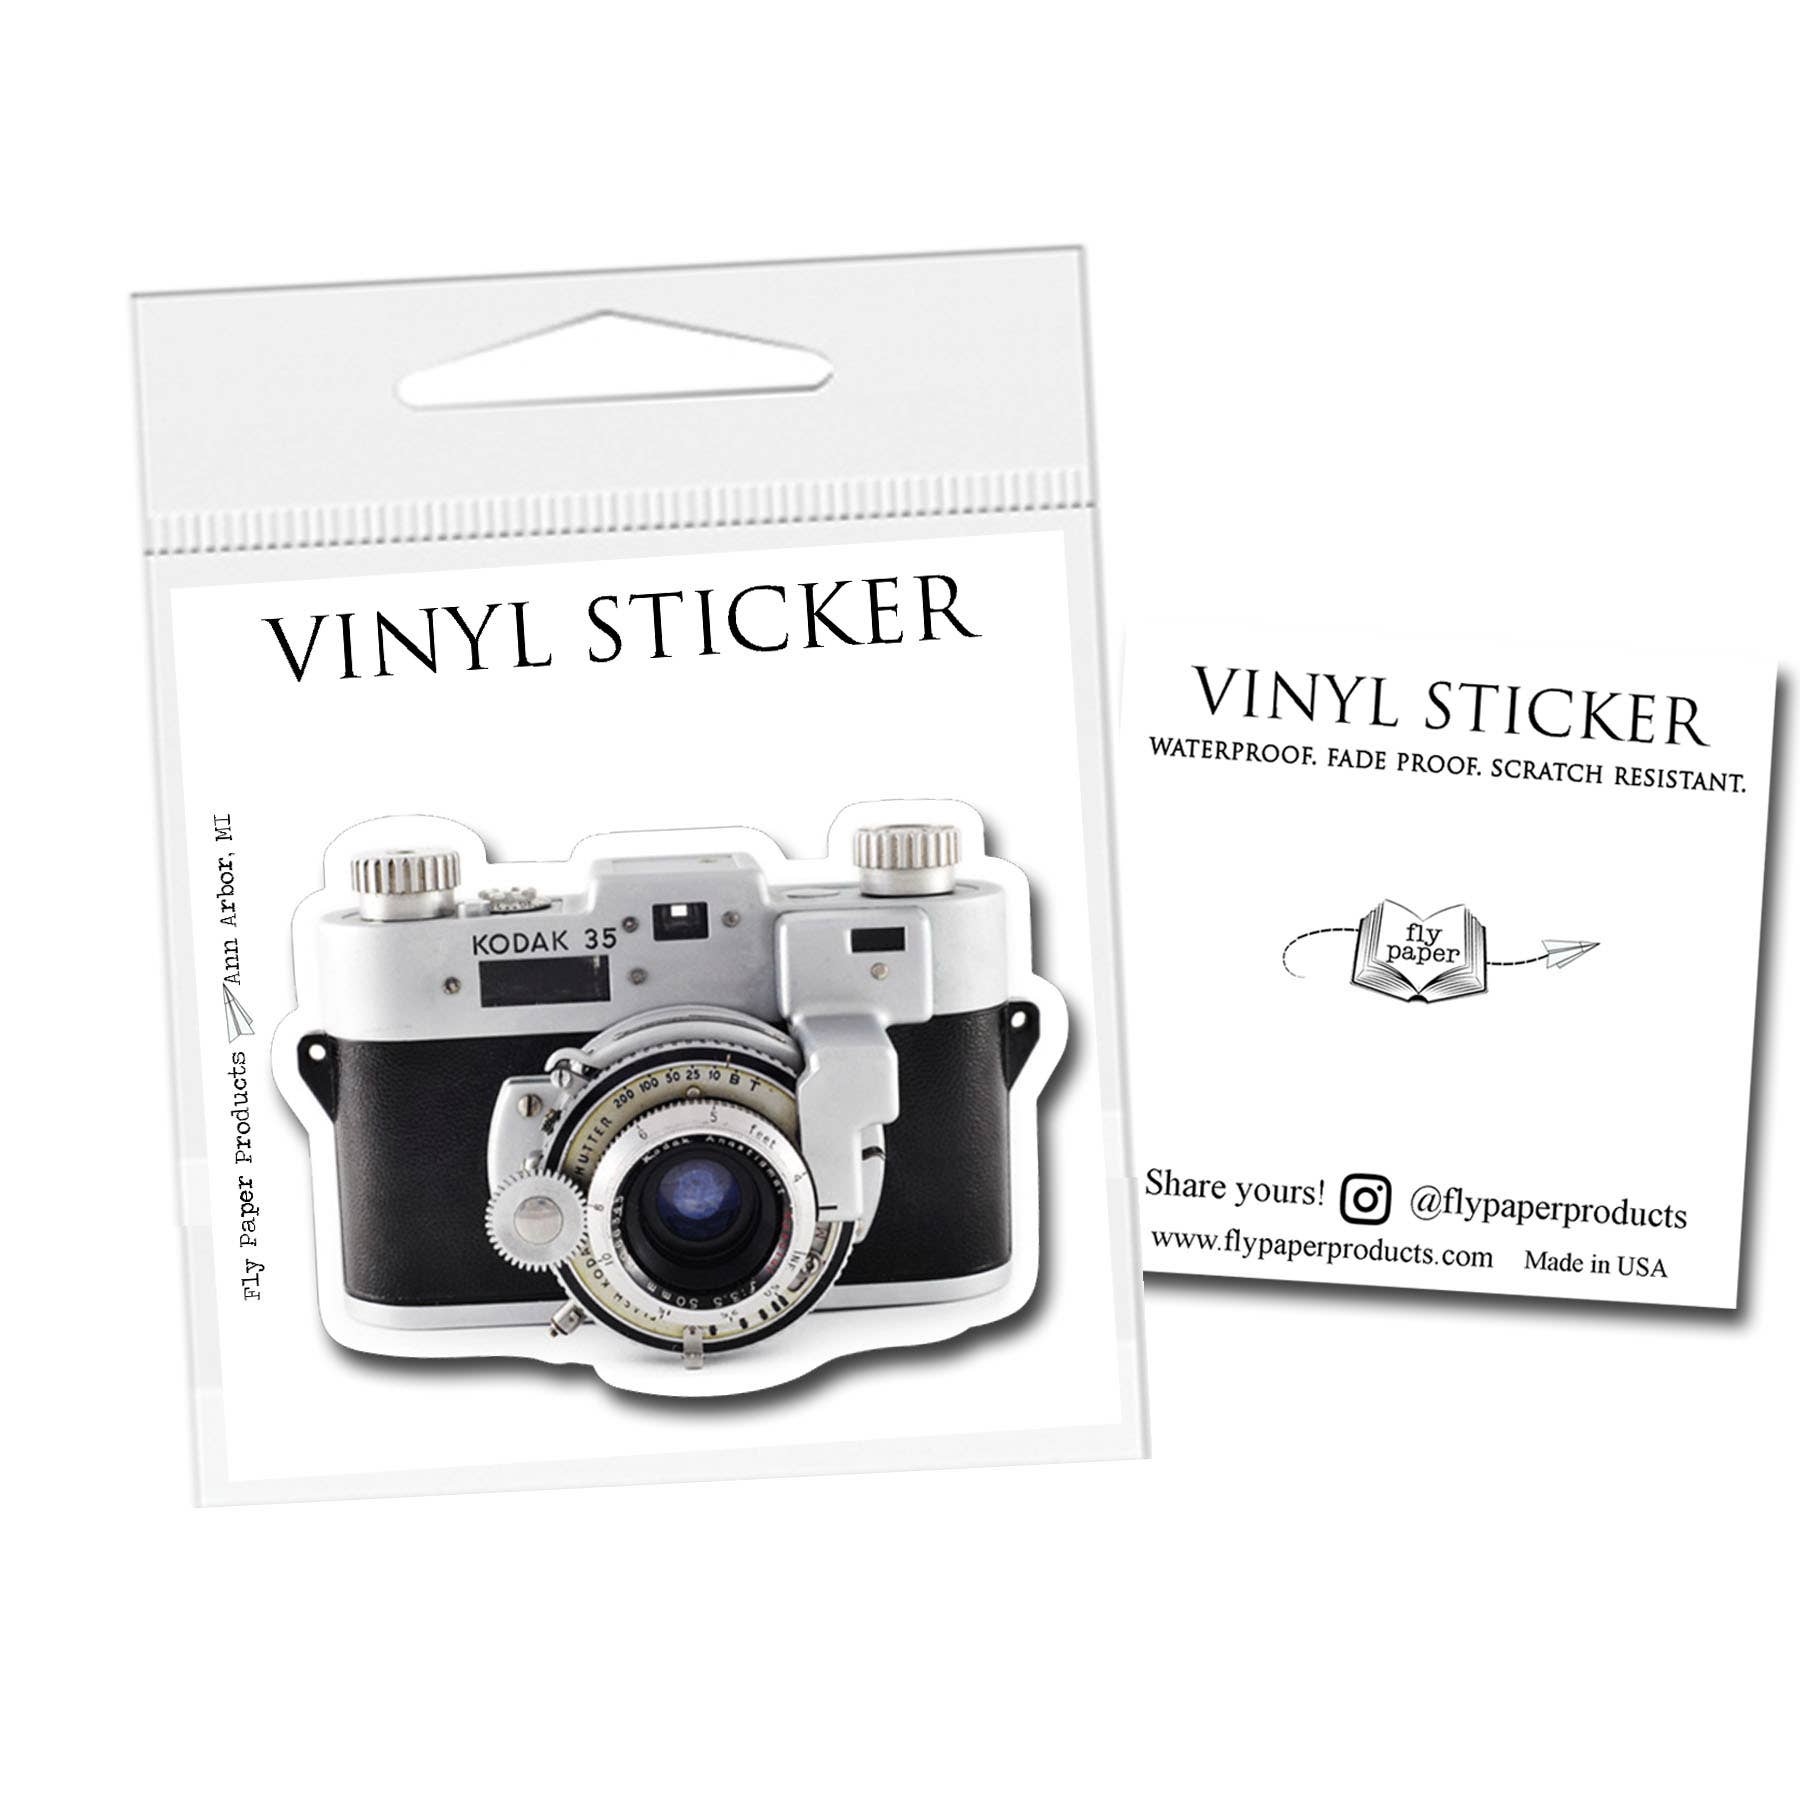 Vintage Kodak Camera Vinyl Sticker: Packaged Sticker for Camera Enthusiasts